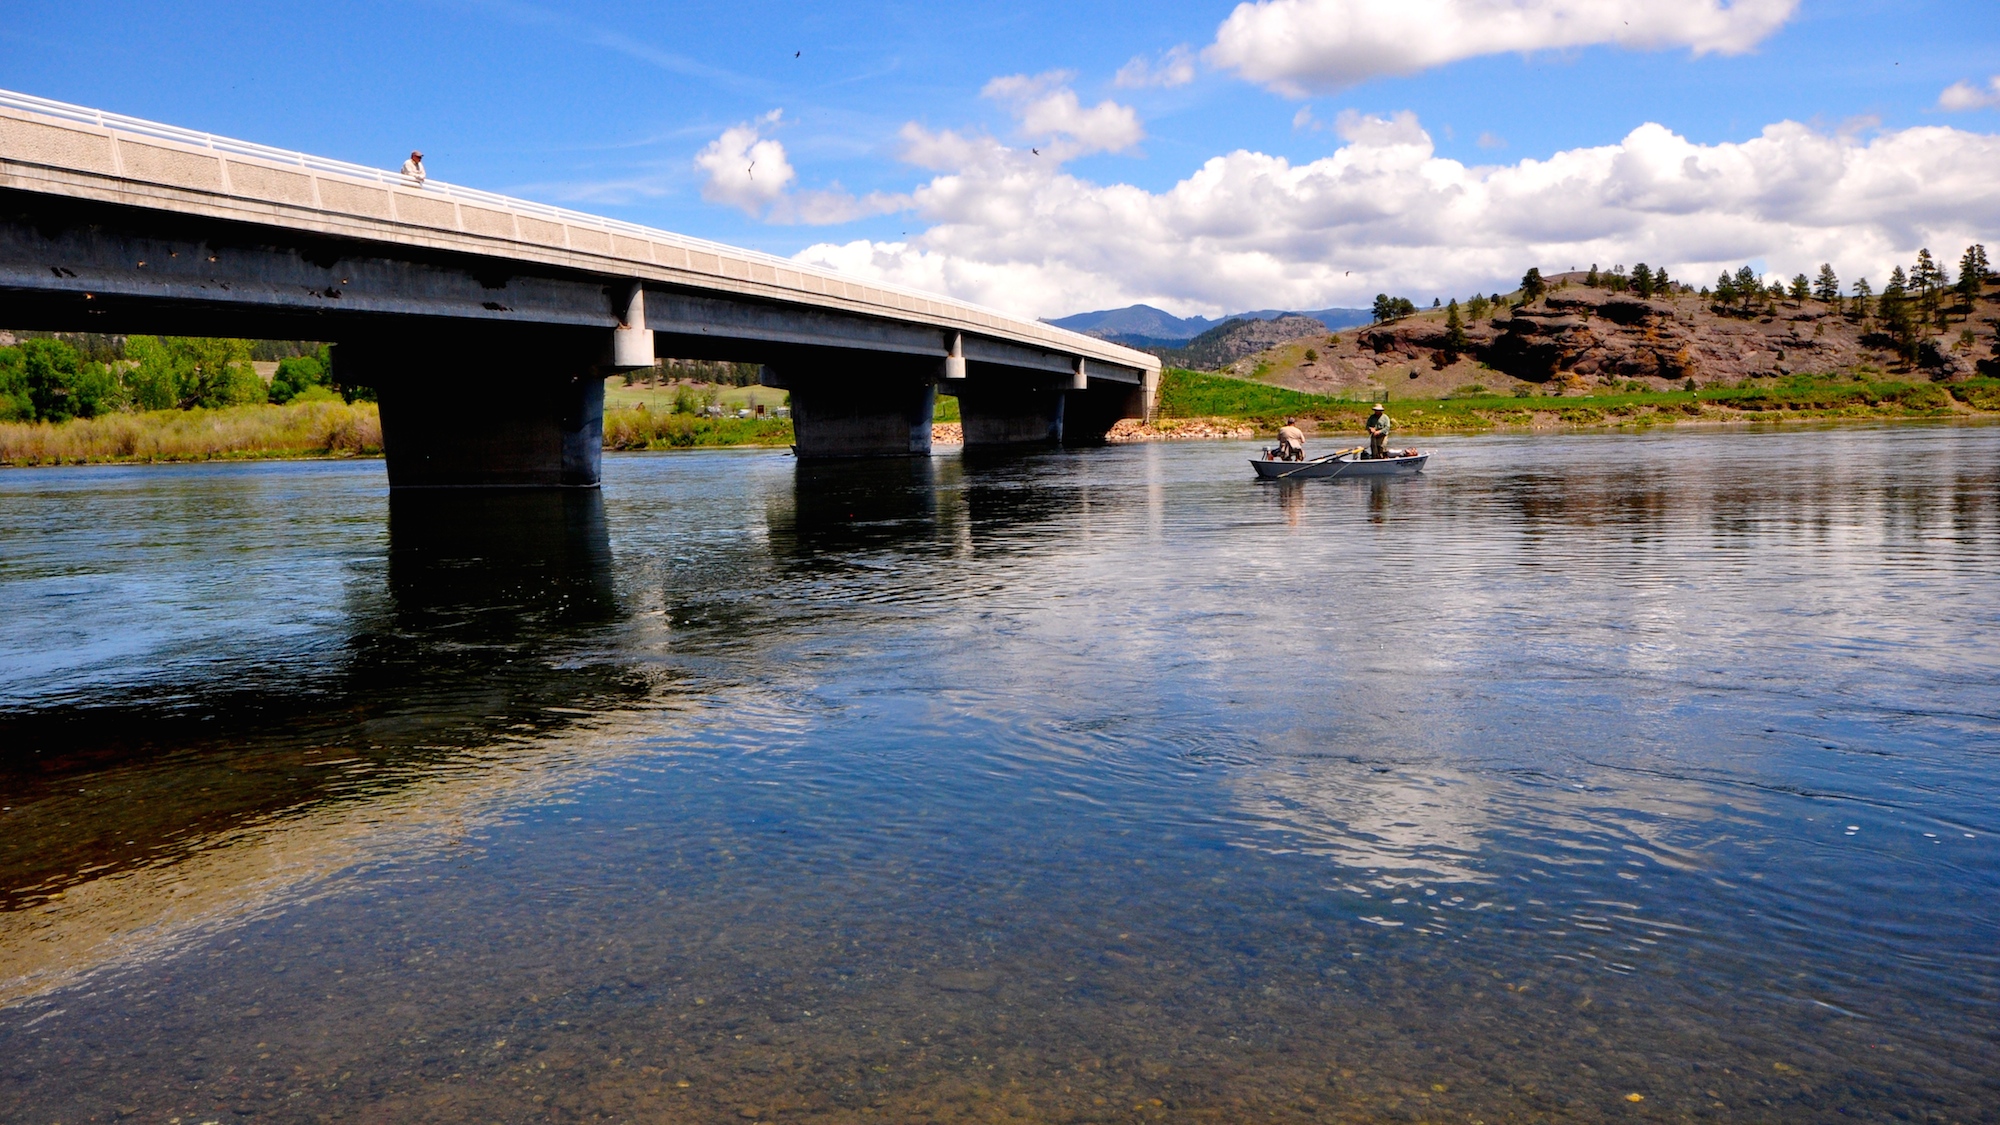 Missouri River Montana Fishing Report June 1st 2015